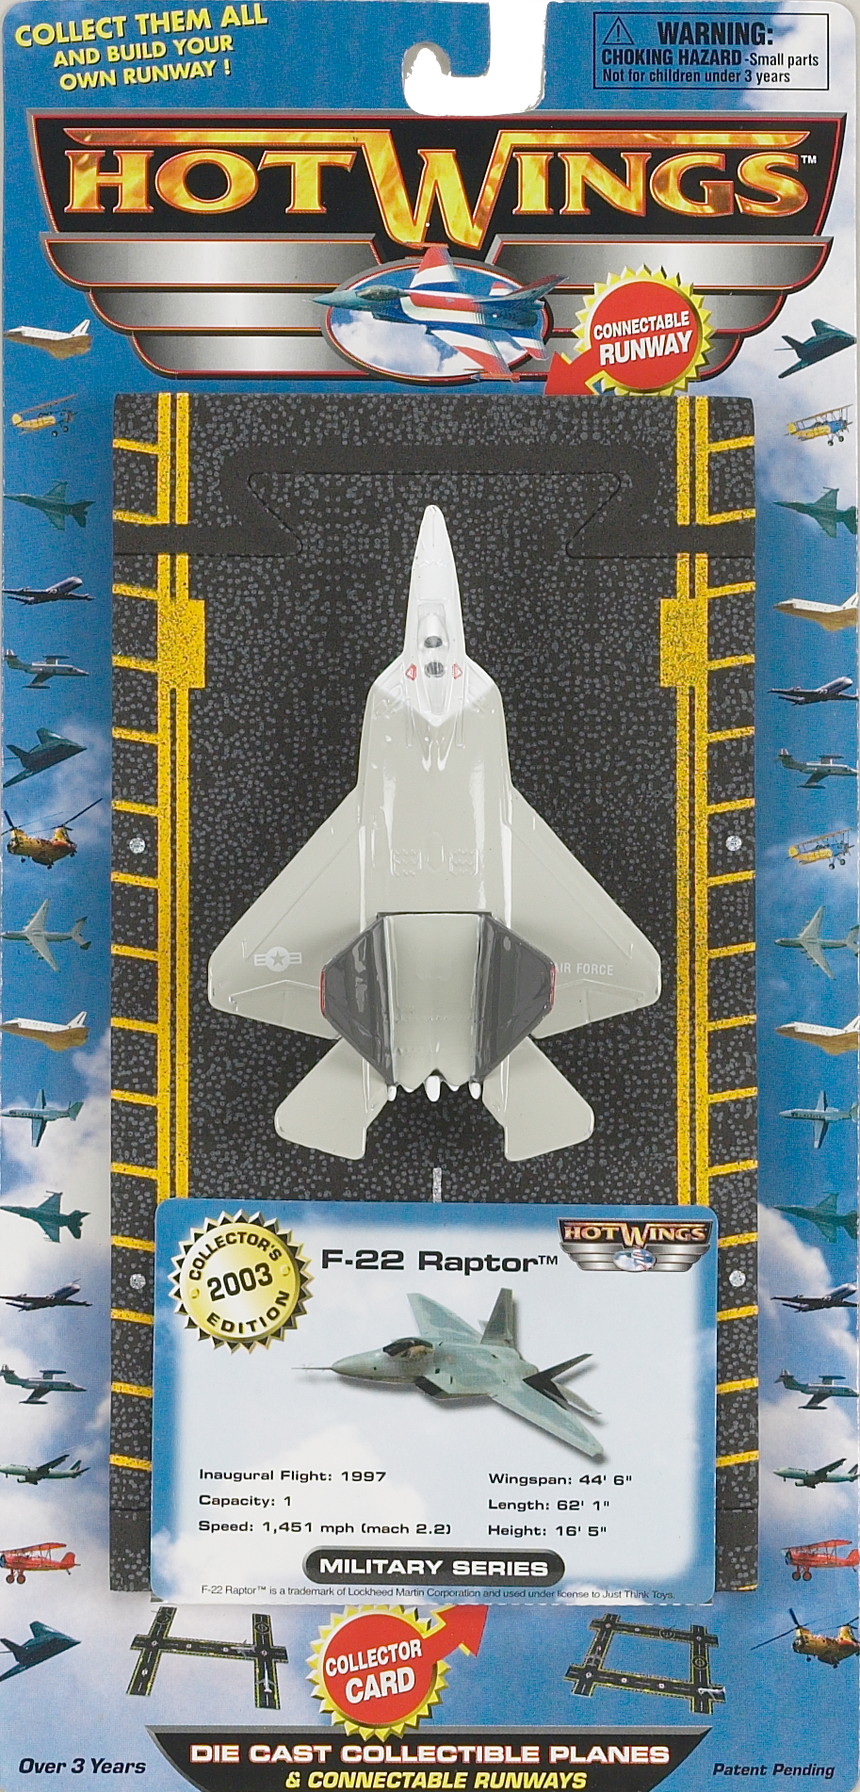 F-22 Raptor (white & grey markings)